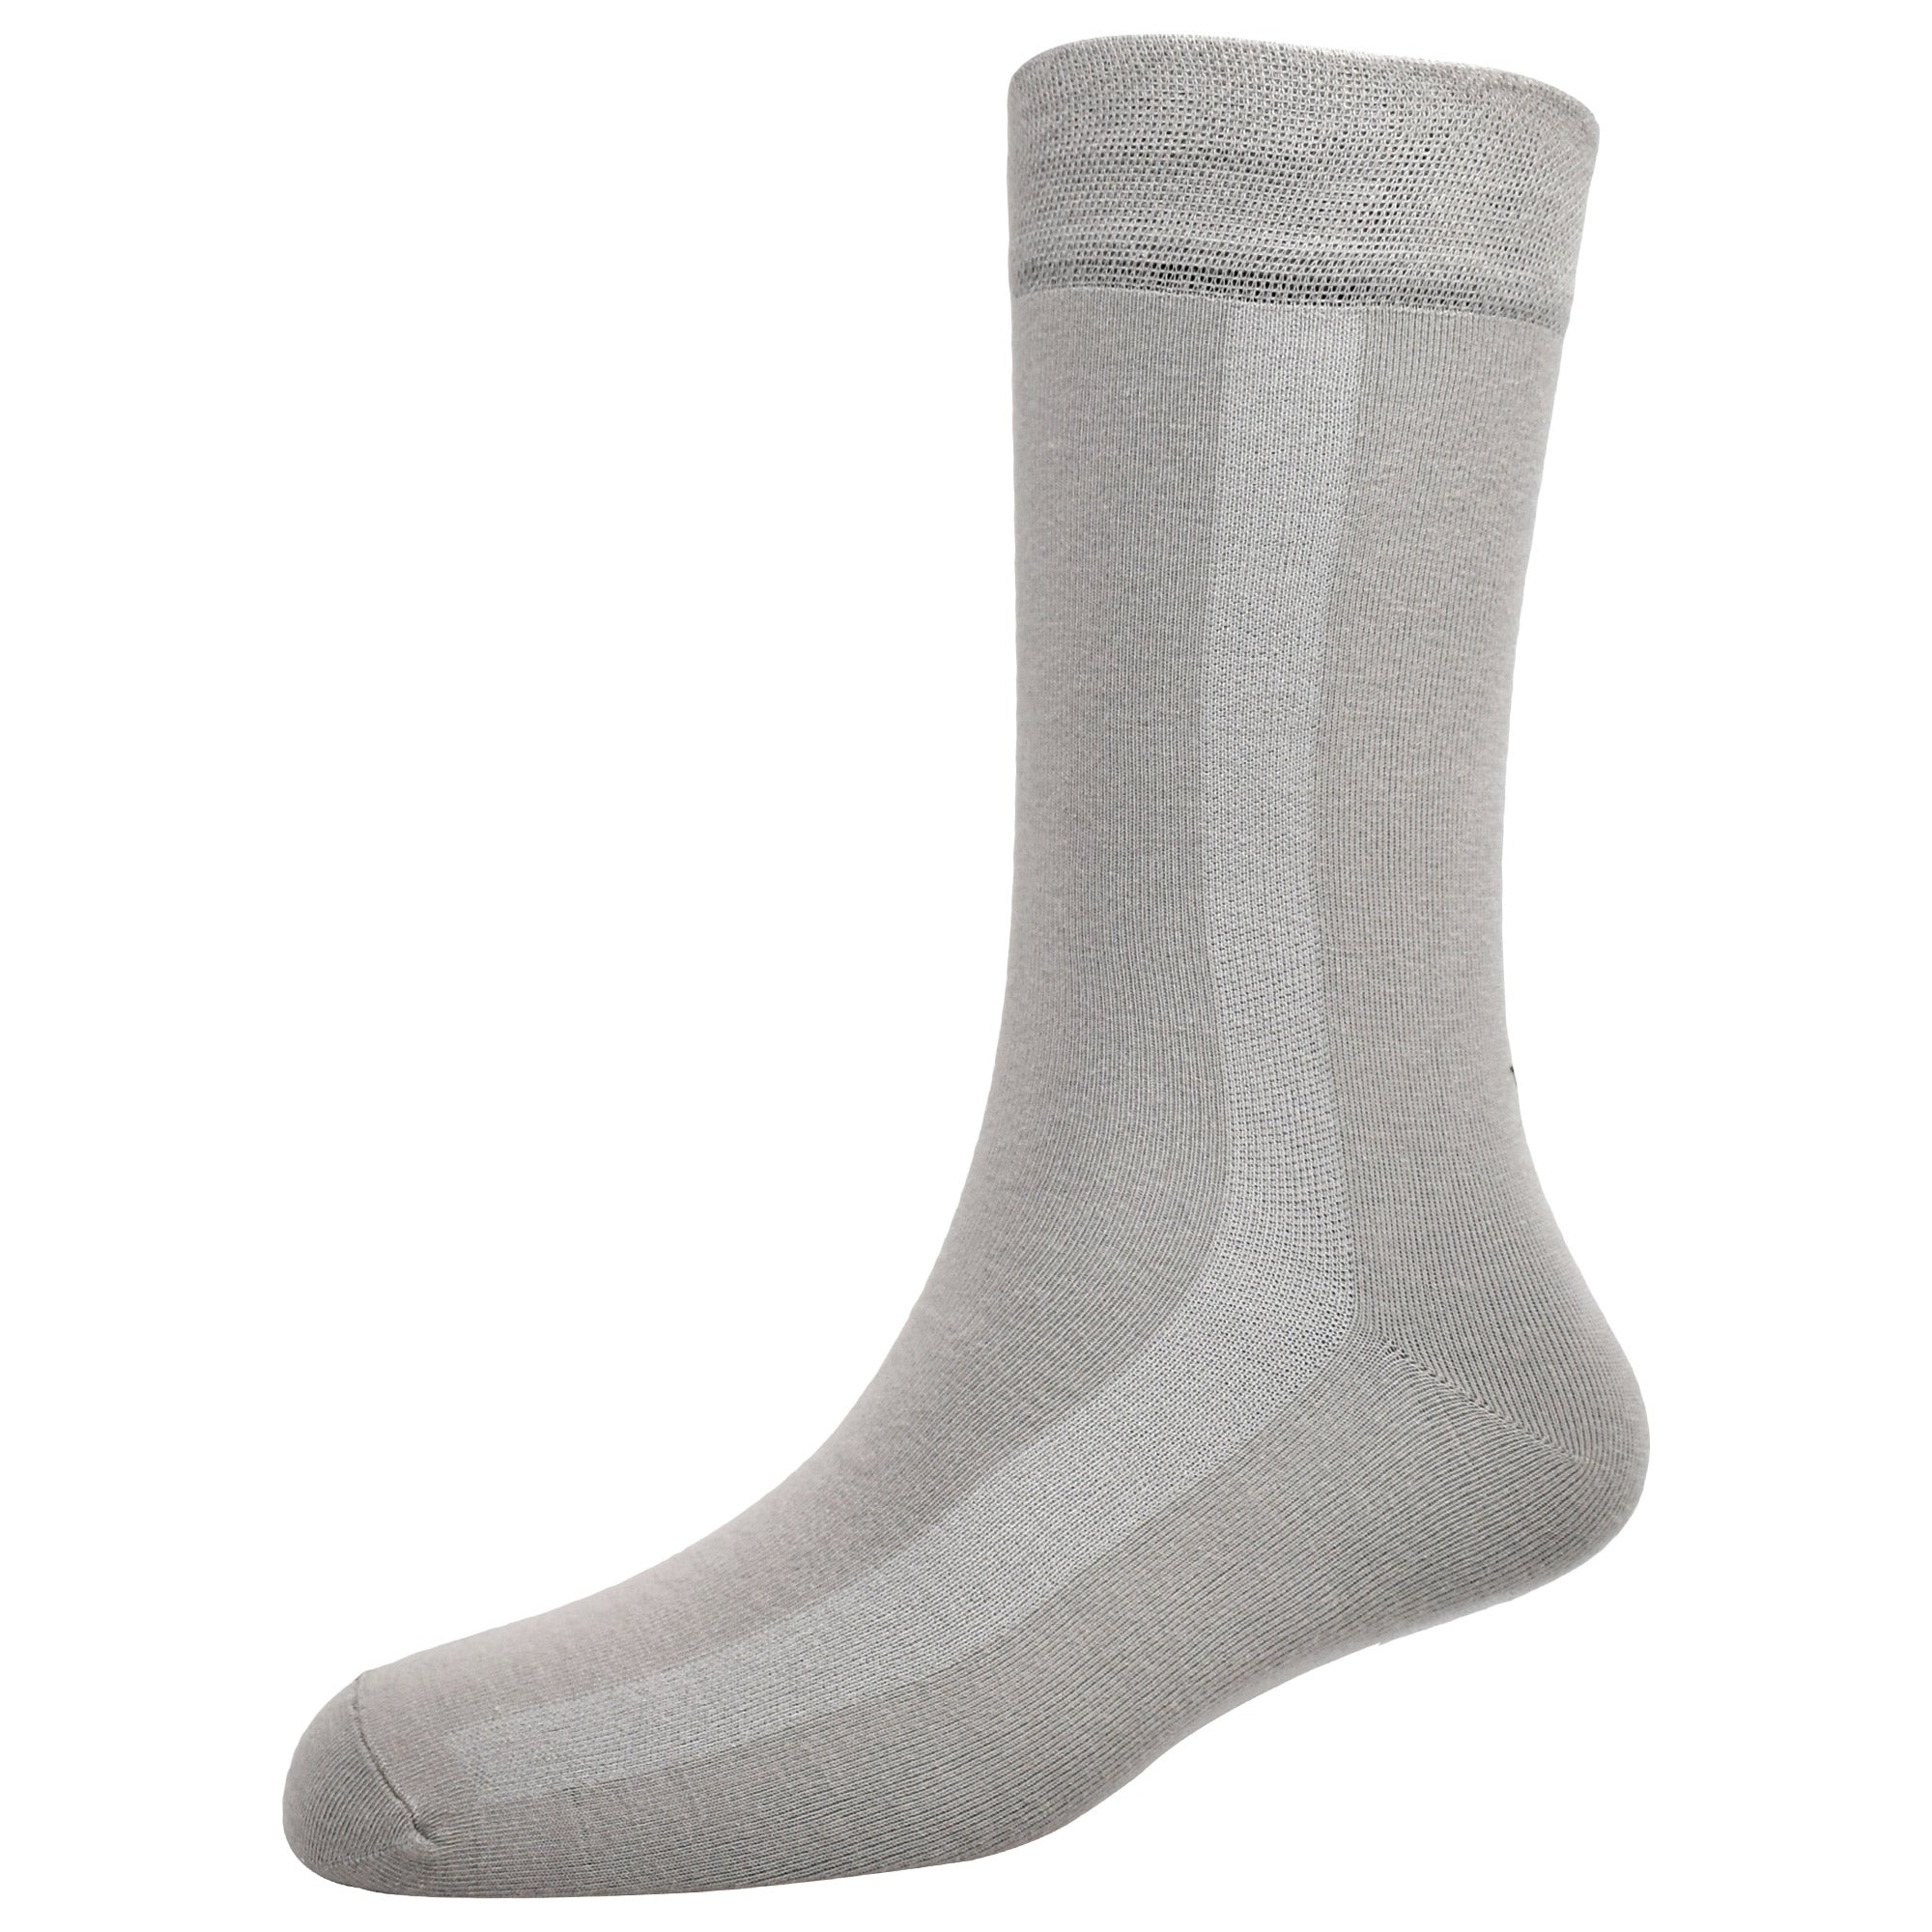 Men's HEALTH Crew Socks - Pack of 3 pairs